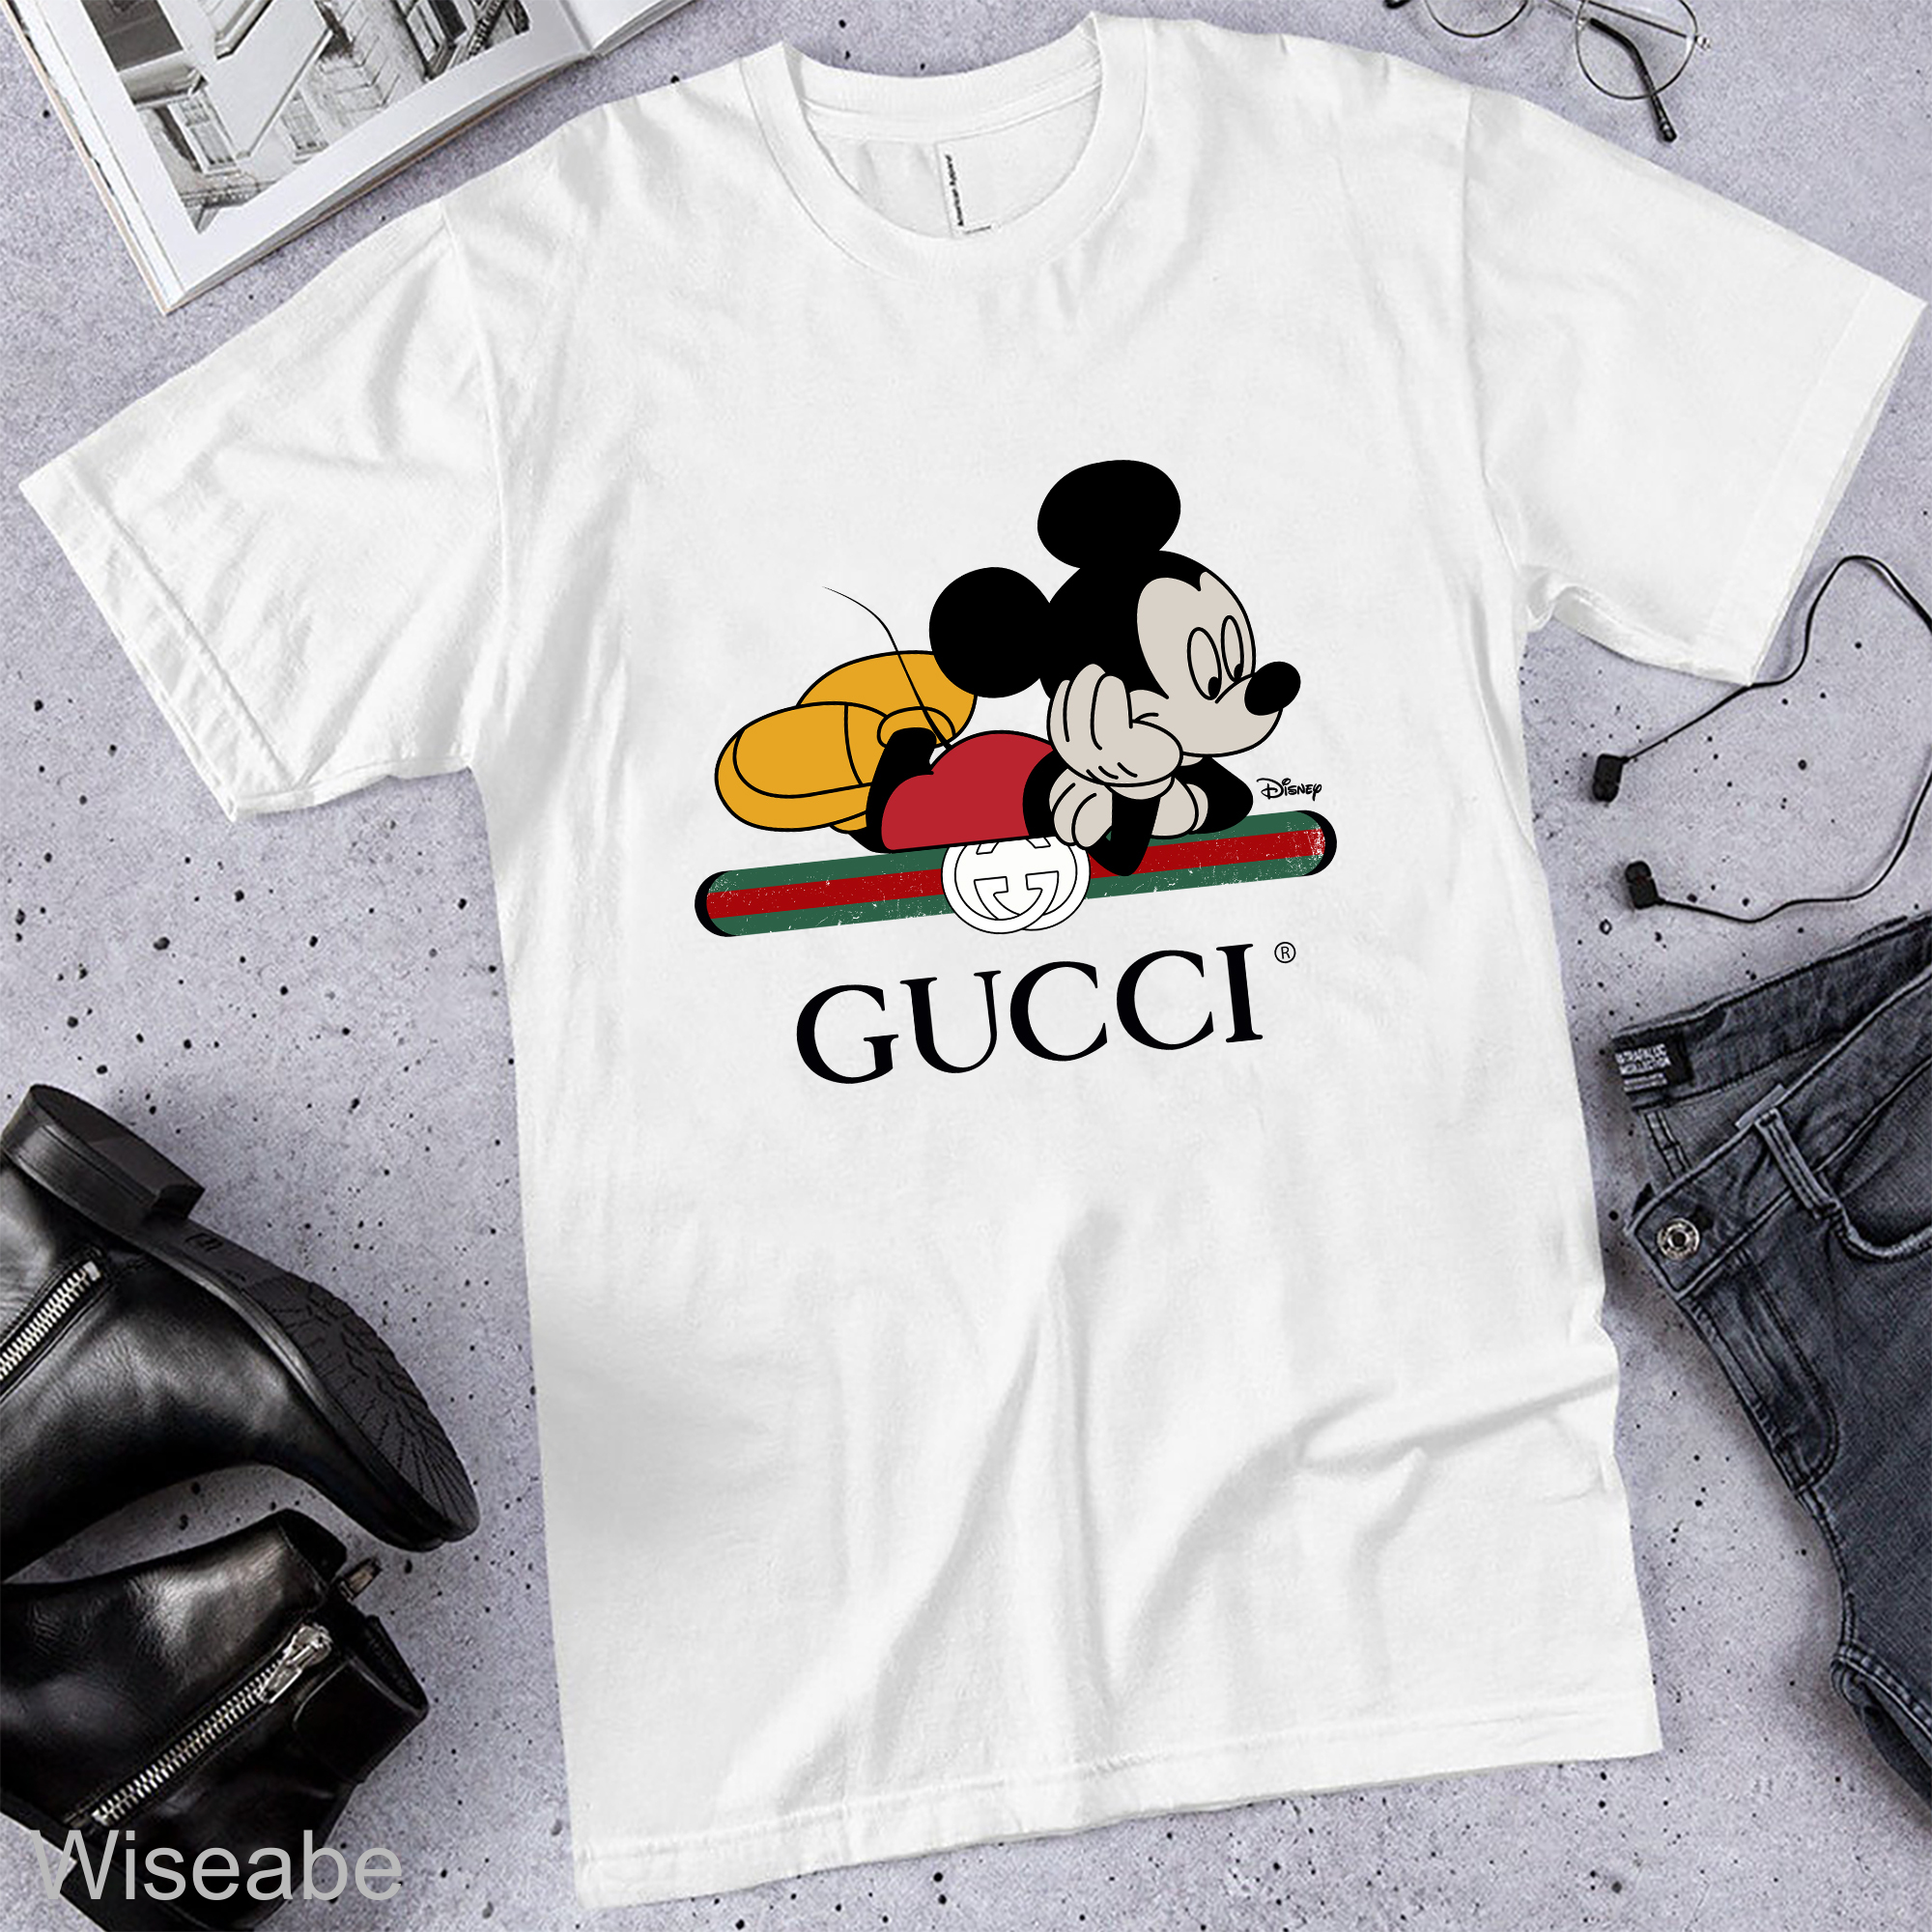 Gucci Mickey Mouse T-Shirt, Cheap Gucci Shirt